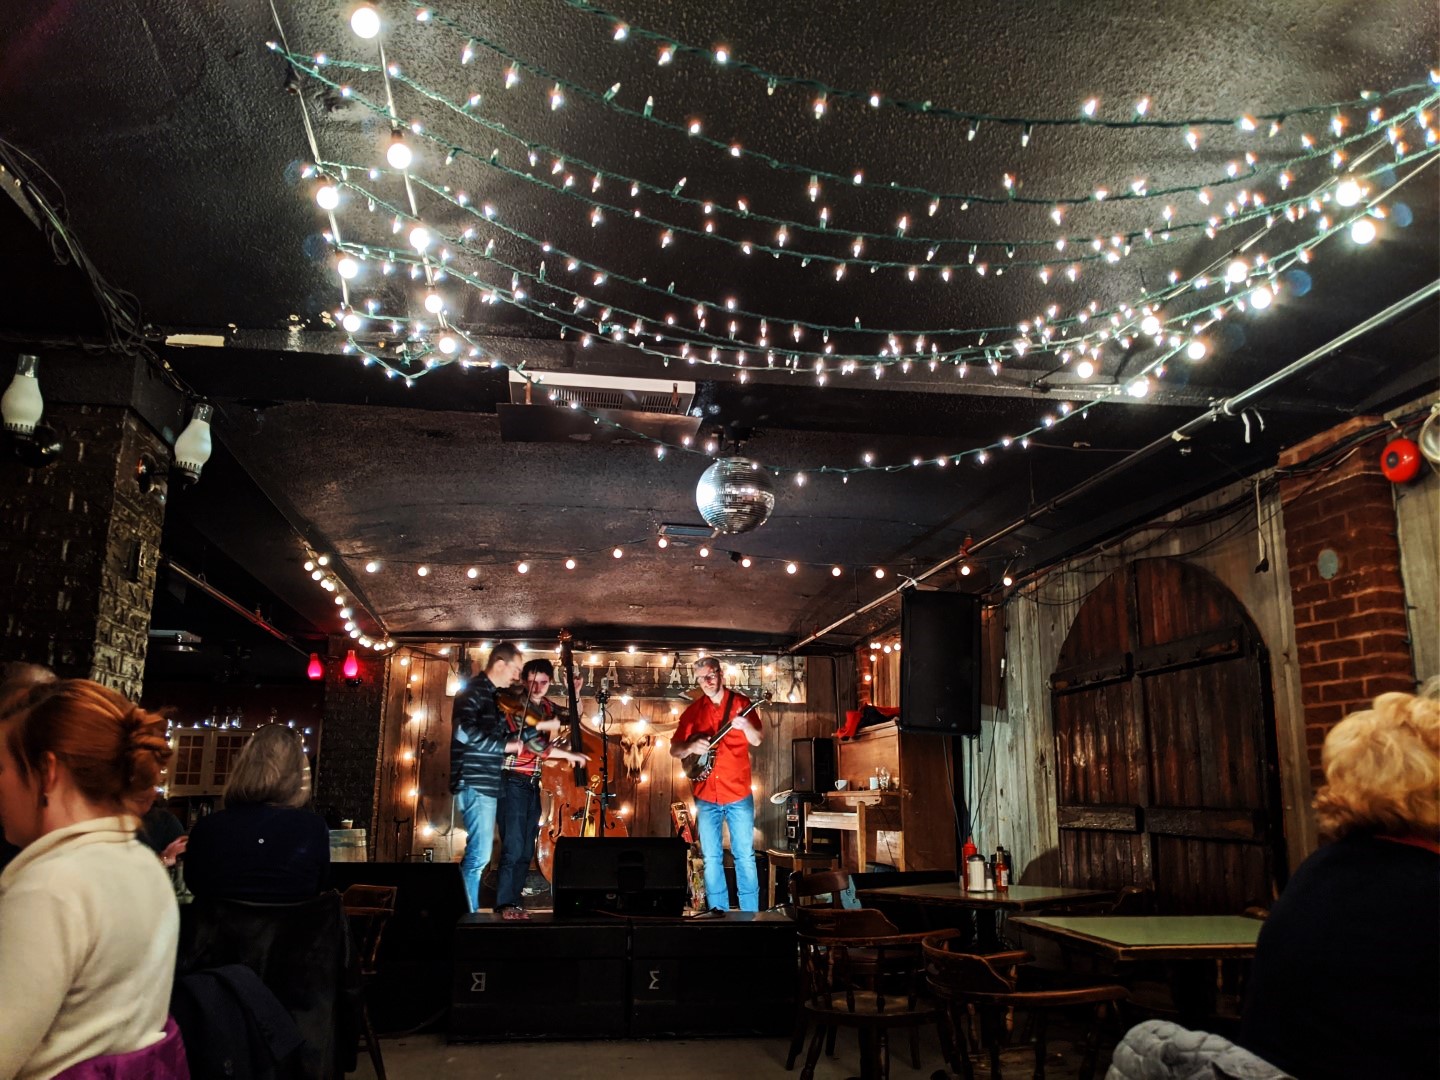 band performing on stage under lights at Dakota tavern